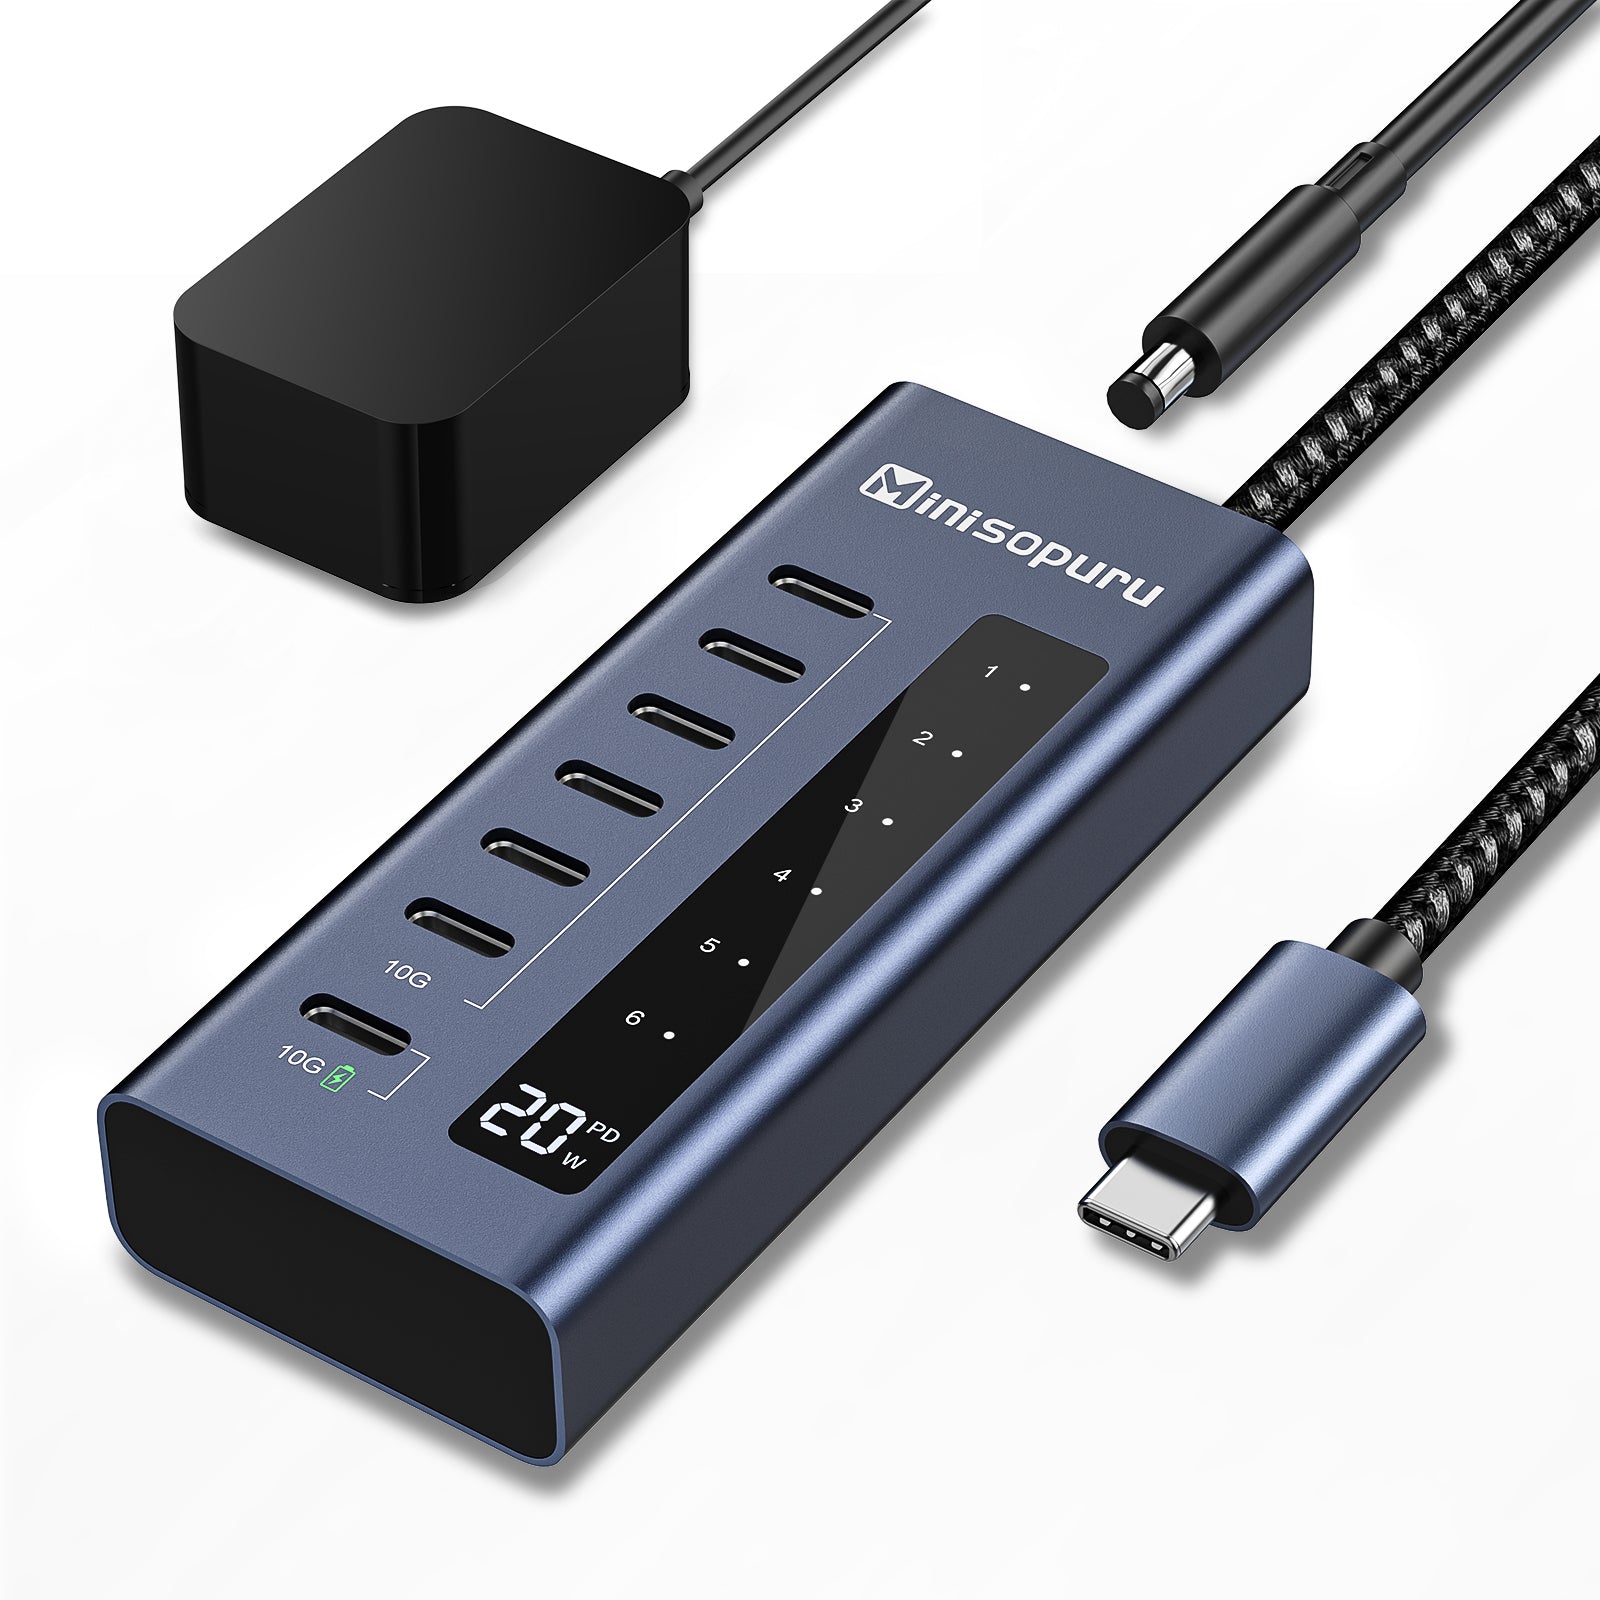 Minisopuru Powered USB C Hub, 7 in 1USB C Hub Powered Support 10Gbps D